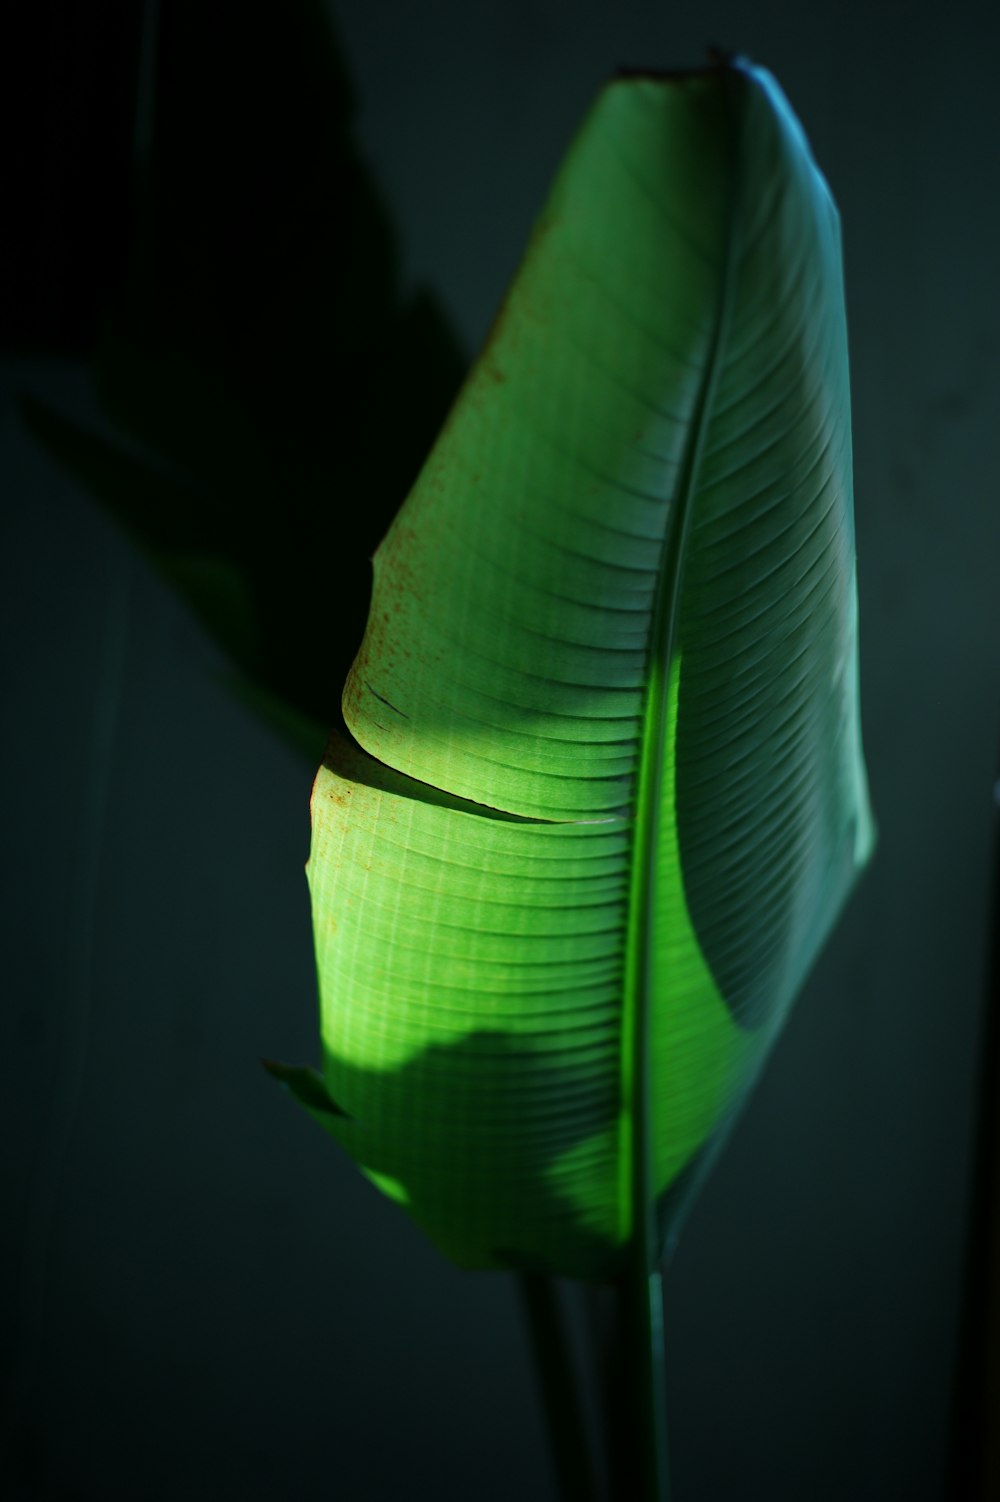 a close up of a green leaf in a dark room